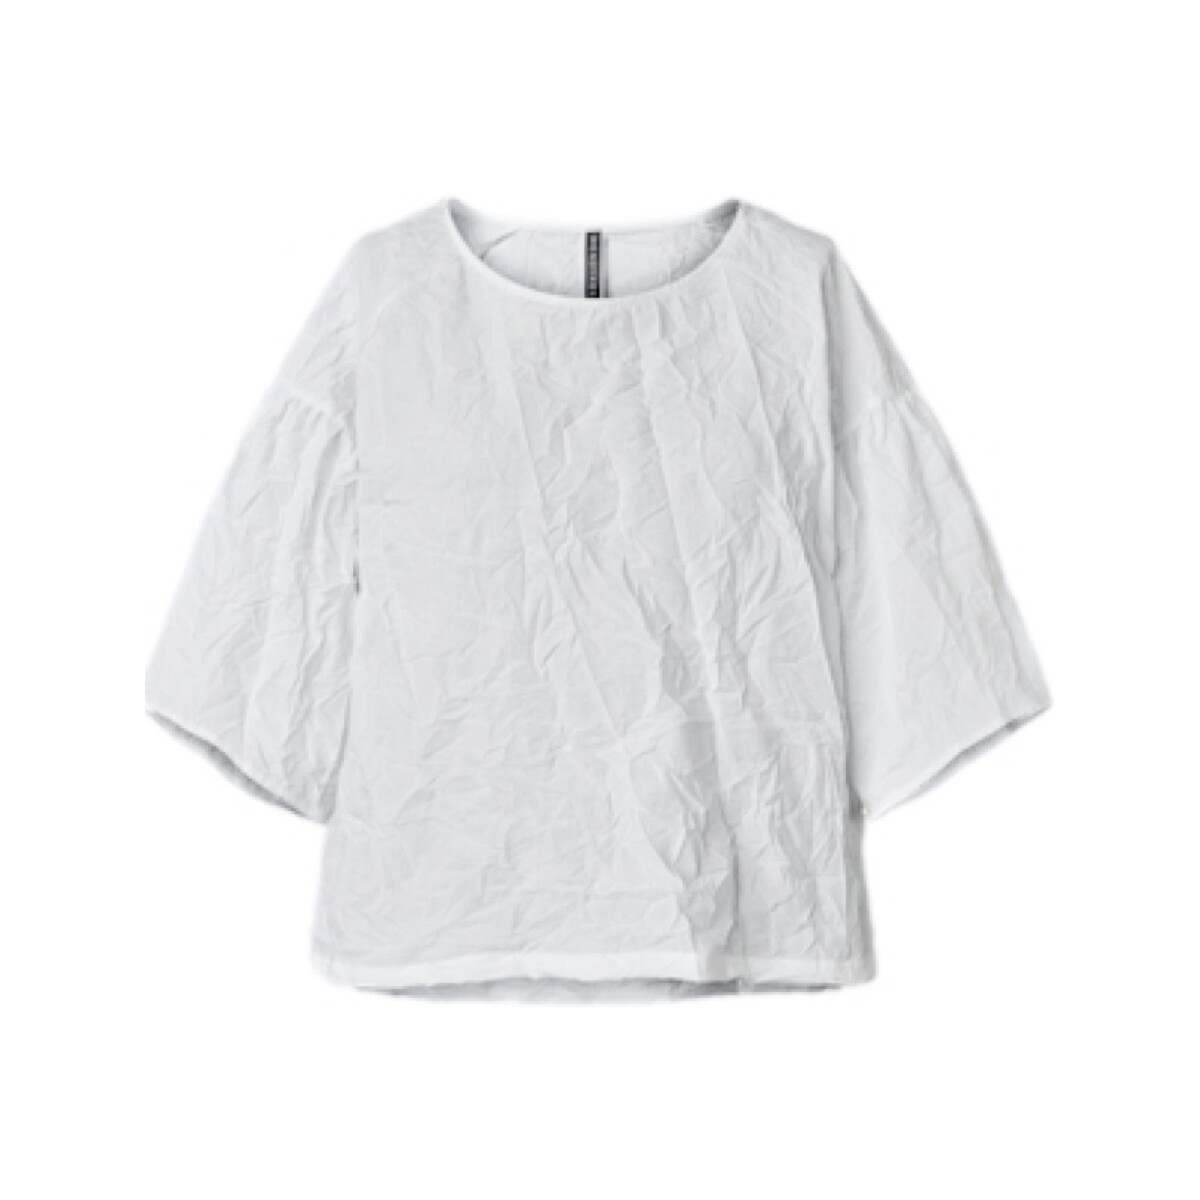 Vêtements Femme Tops / Blouses Wendy Trendy Top 221624 - White Blanc